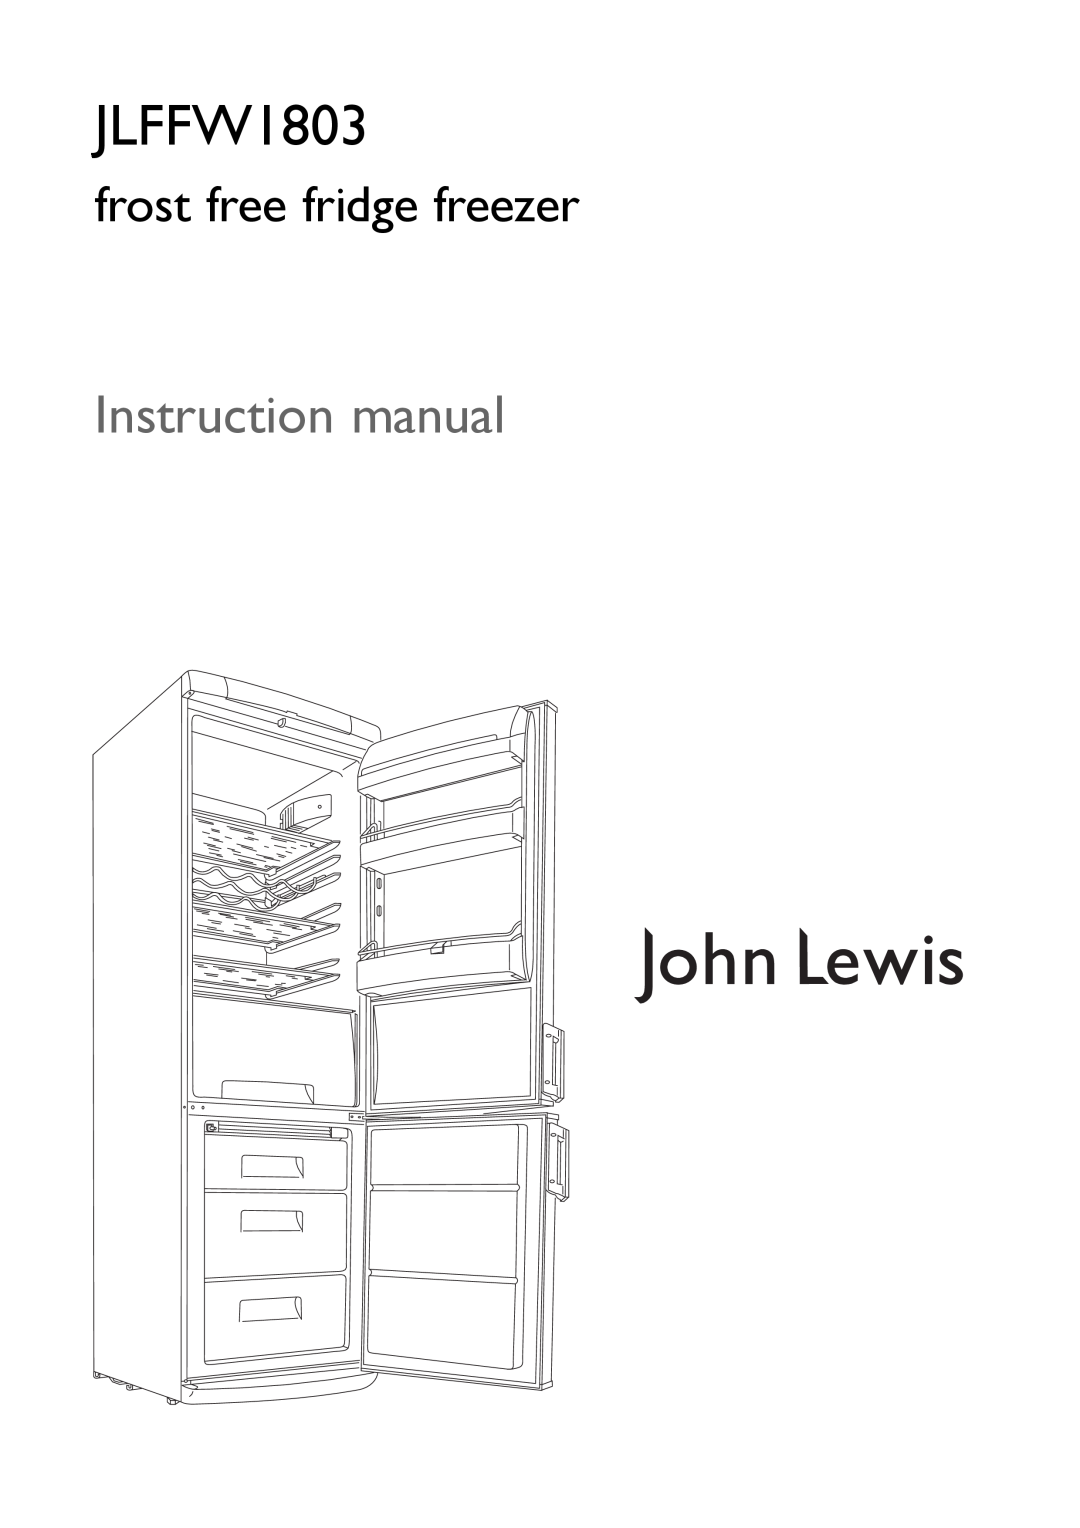 John Lewis JLFFW1803 instruction manual frost free fridge freezer 